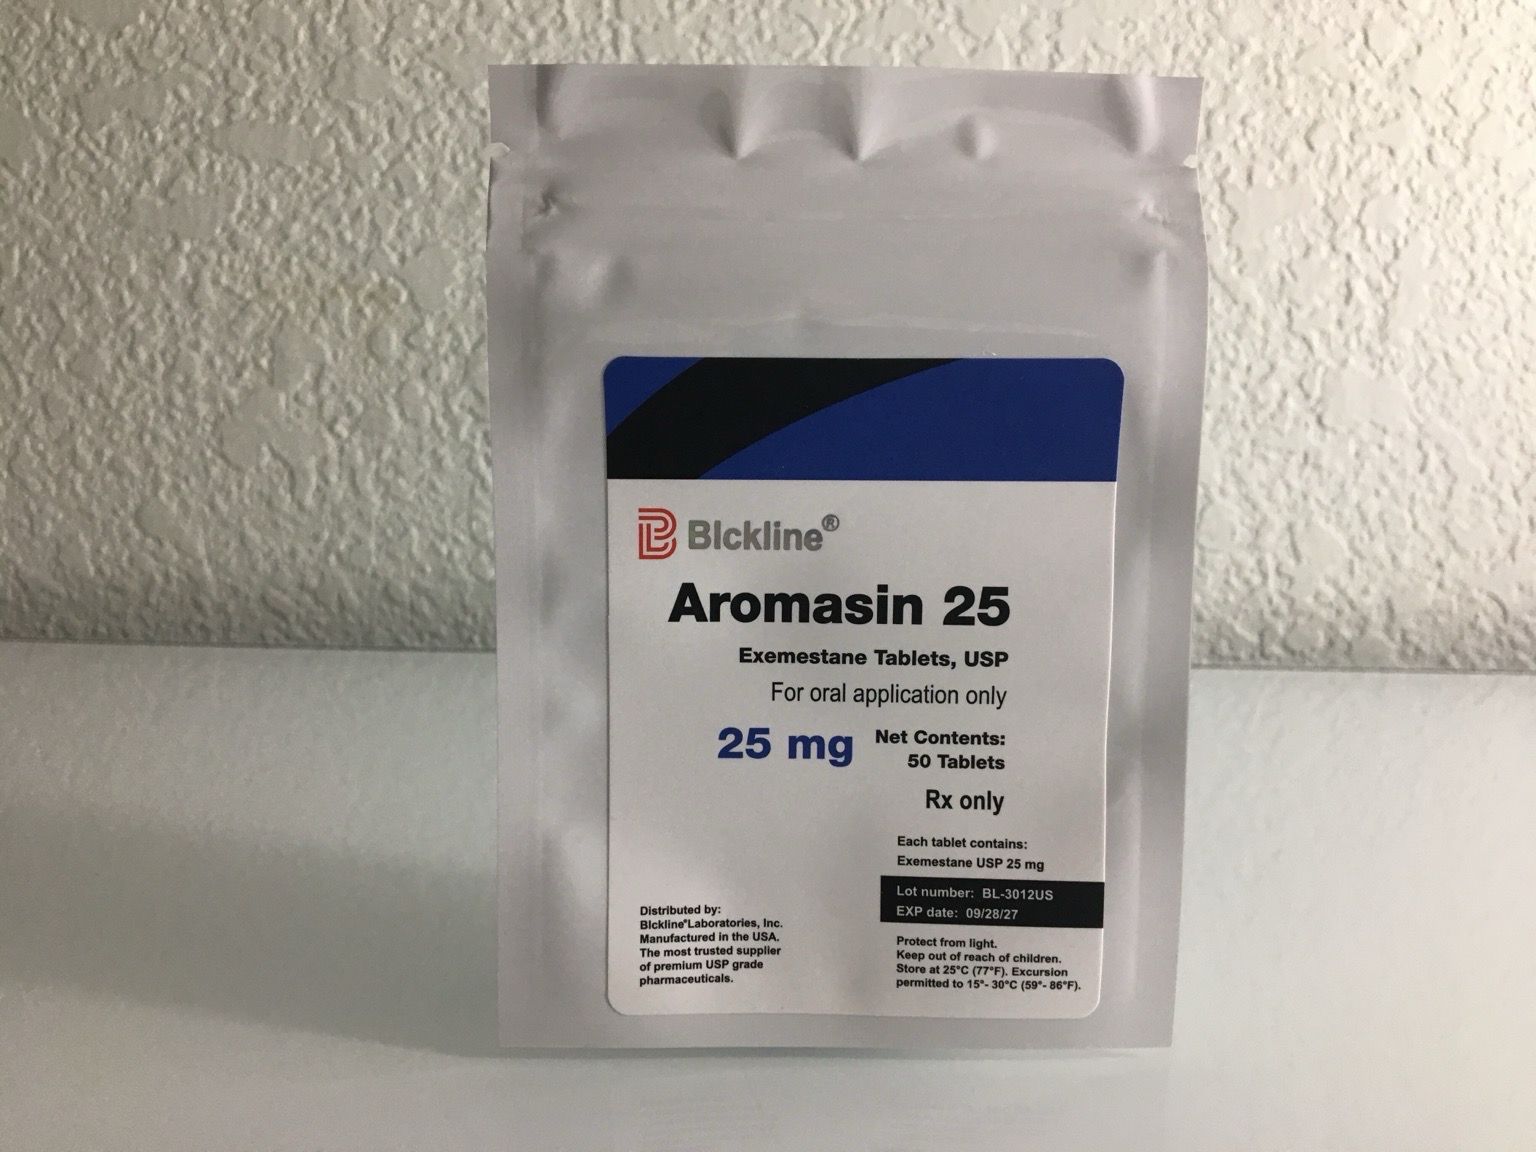 Aromasin 25 mg 50 tablets Exemestane